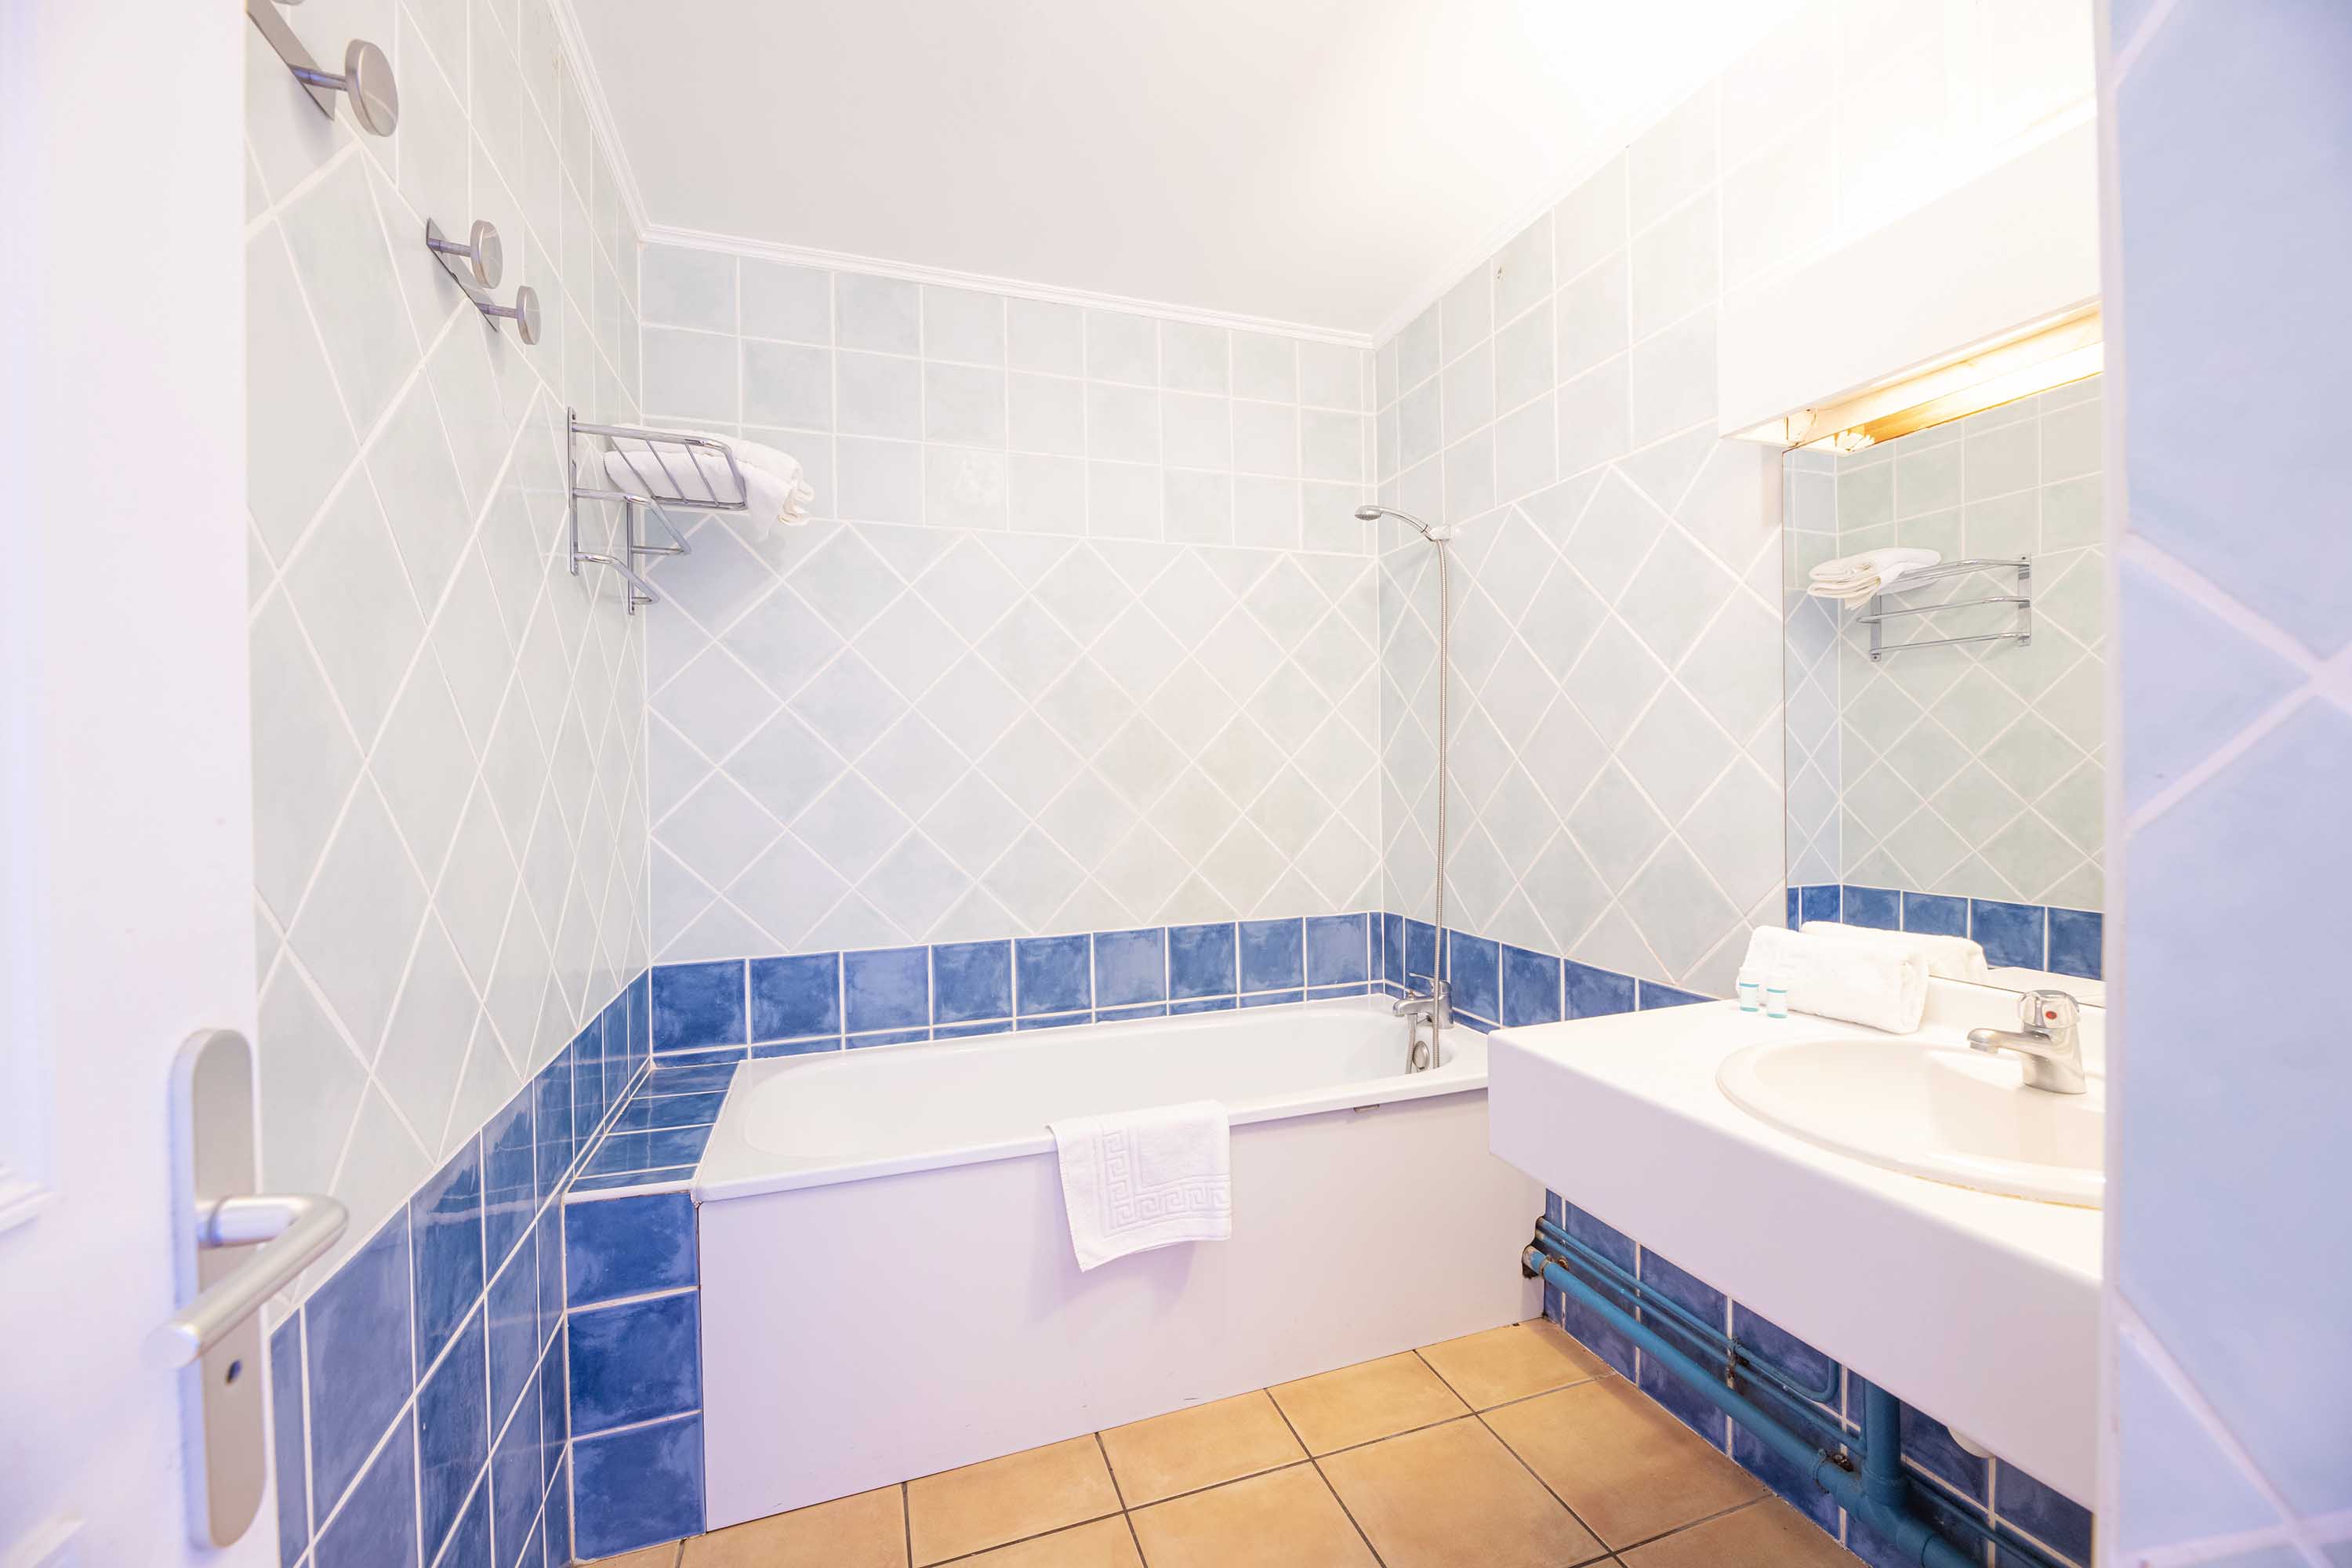 Bathroom with bathtub | Source : Hotel Le Relais des Cîmes - www.relaisdescimes.com